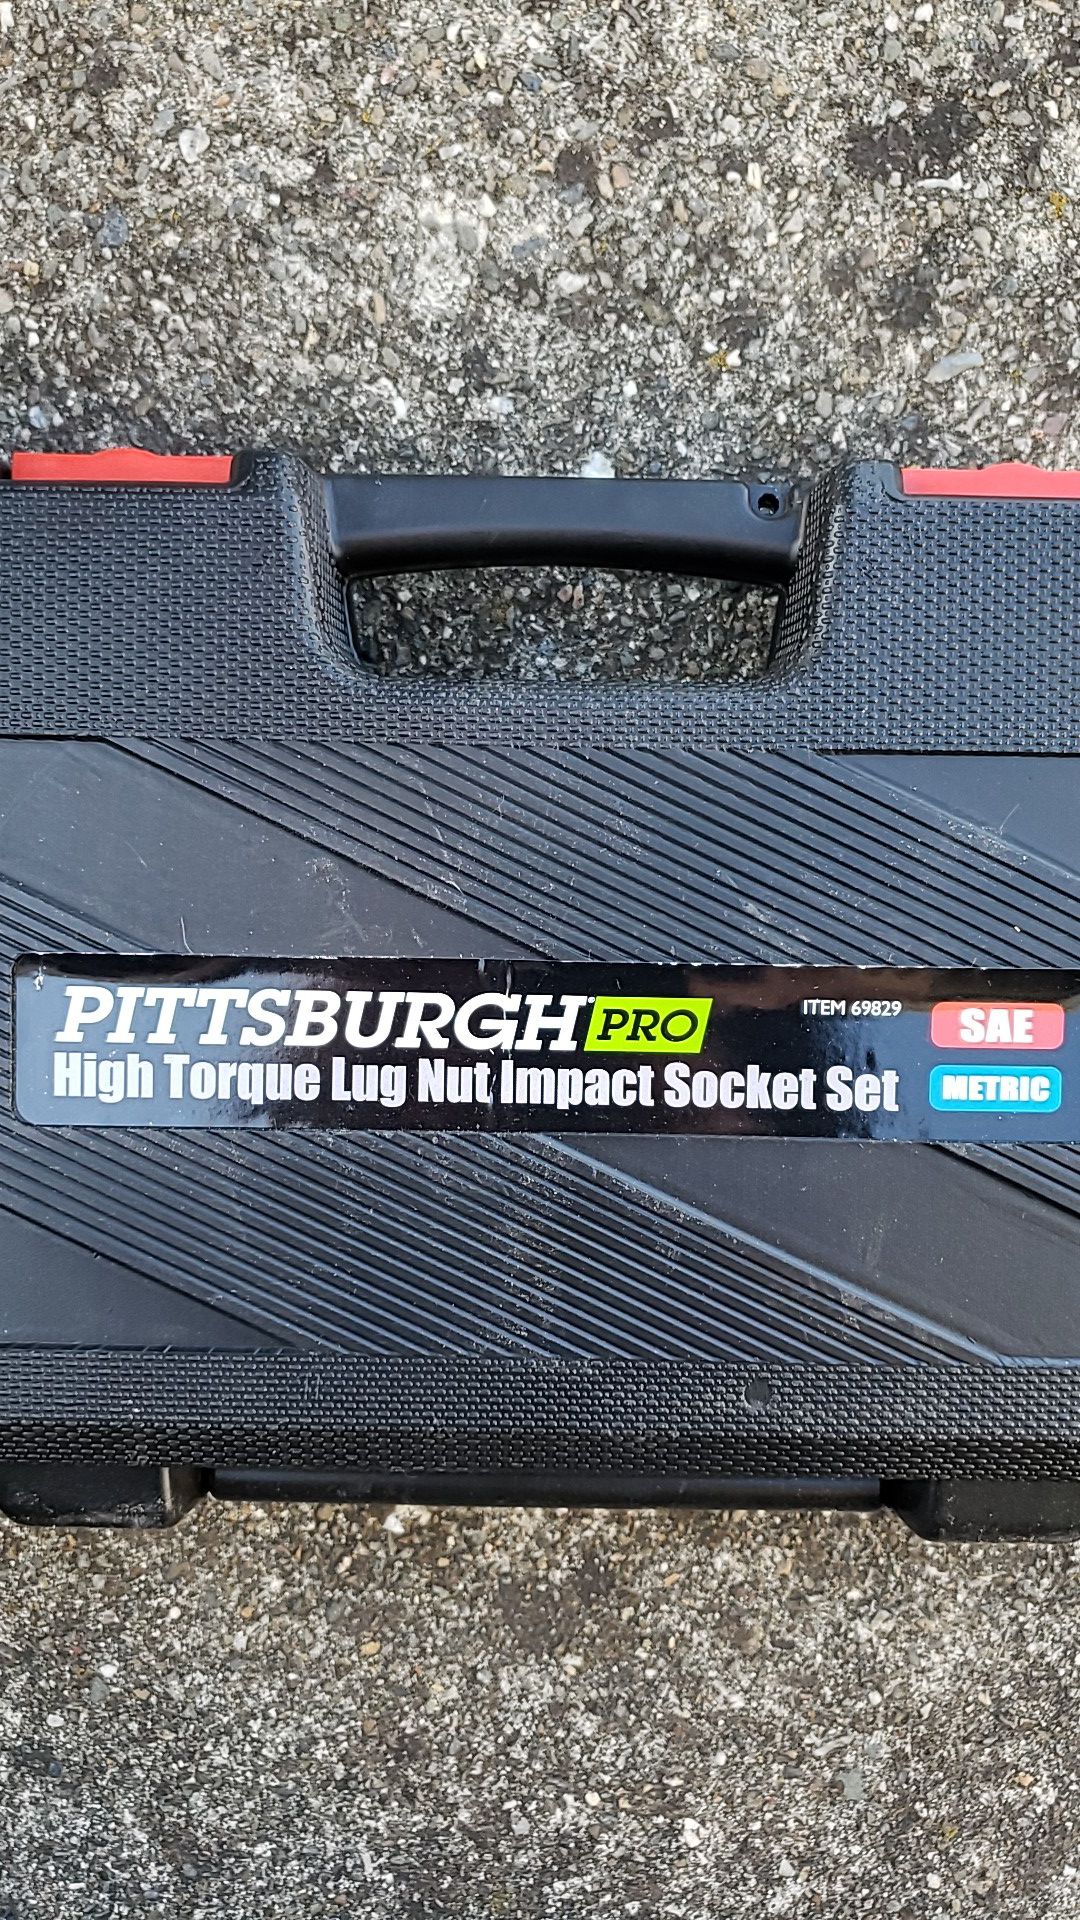 Pittsburg Pro high torque lug nut impact socket set